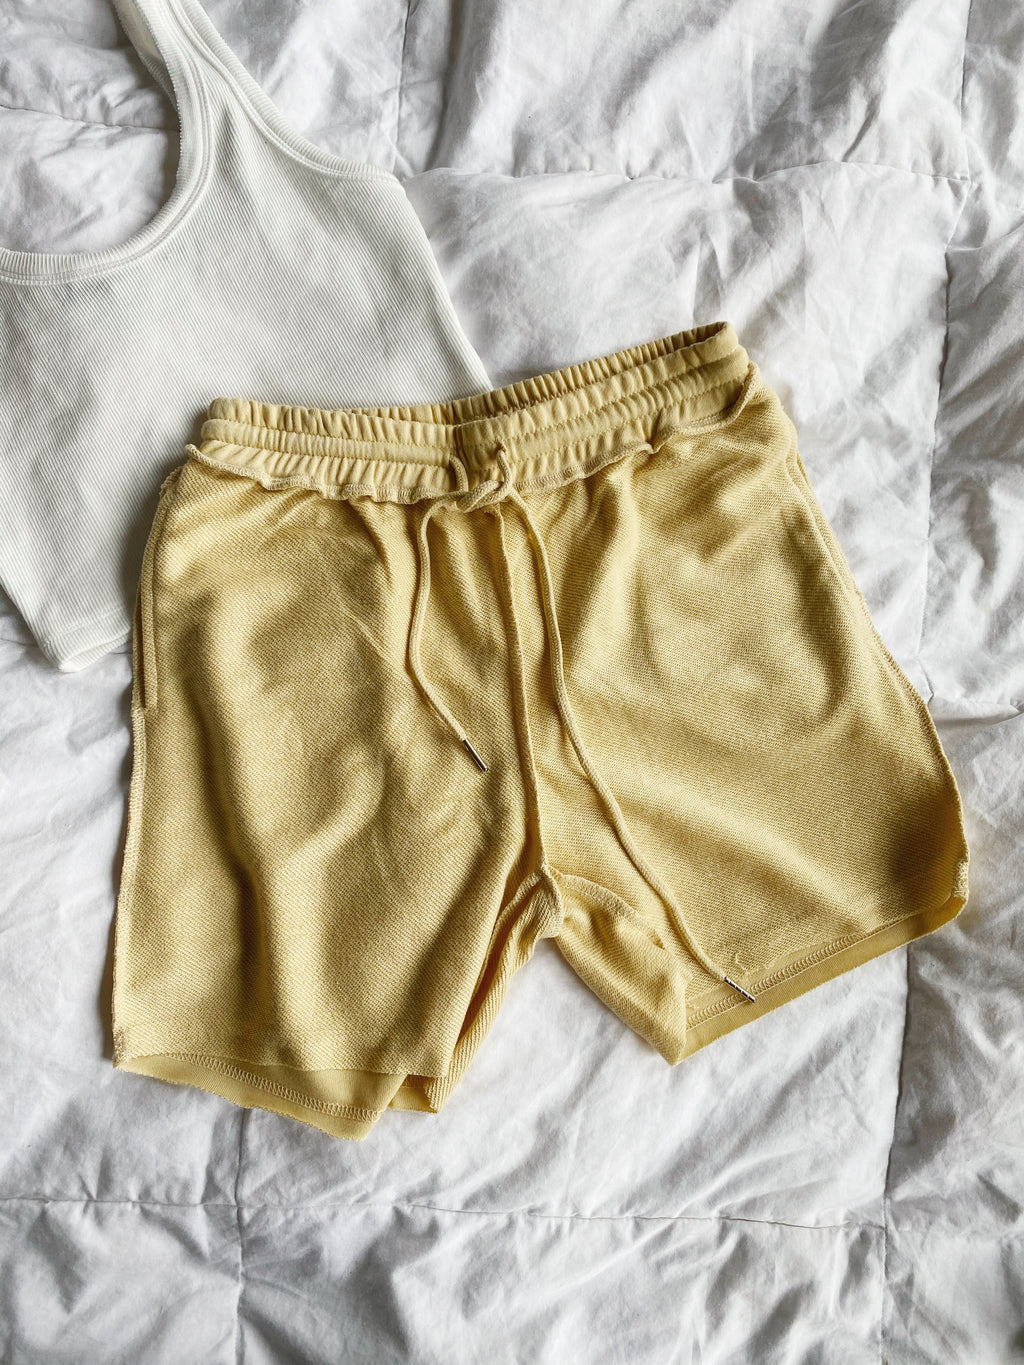 Women's Bottoms - Pants, Shorts, Denim, Jeans, Leggings - BIRD BEE